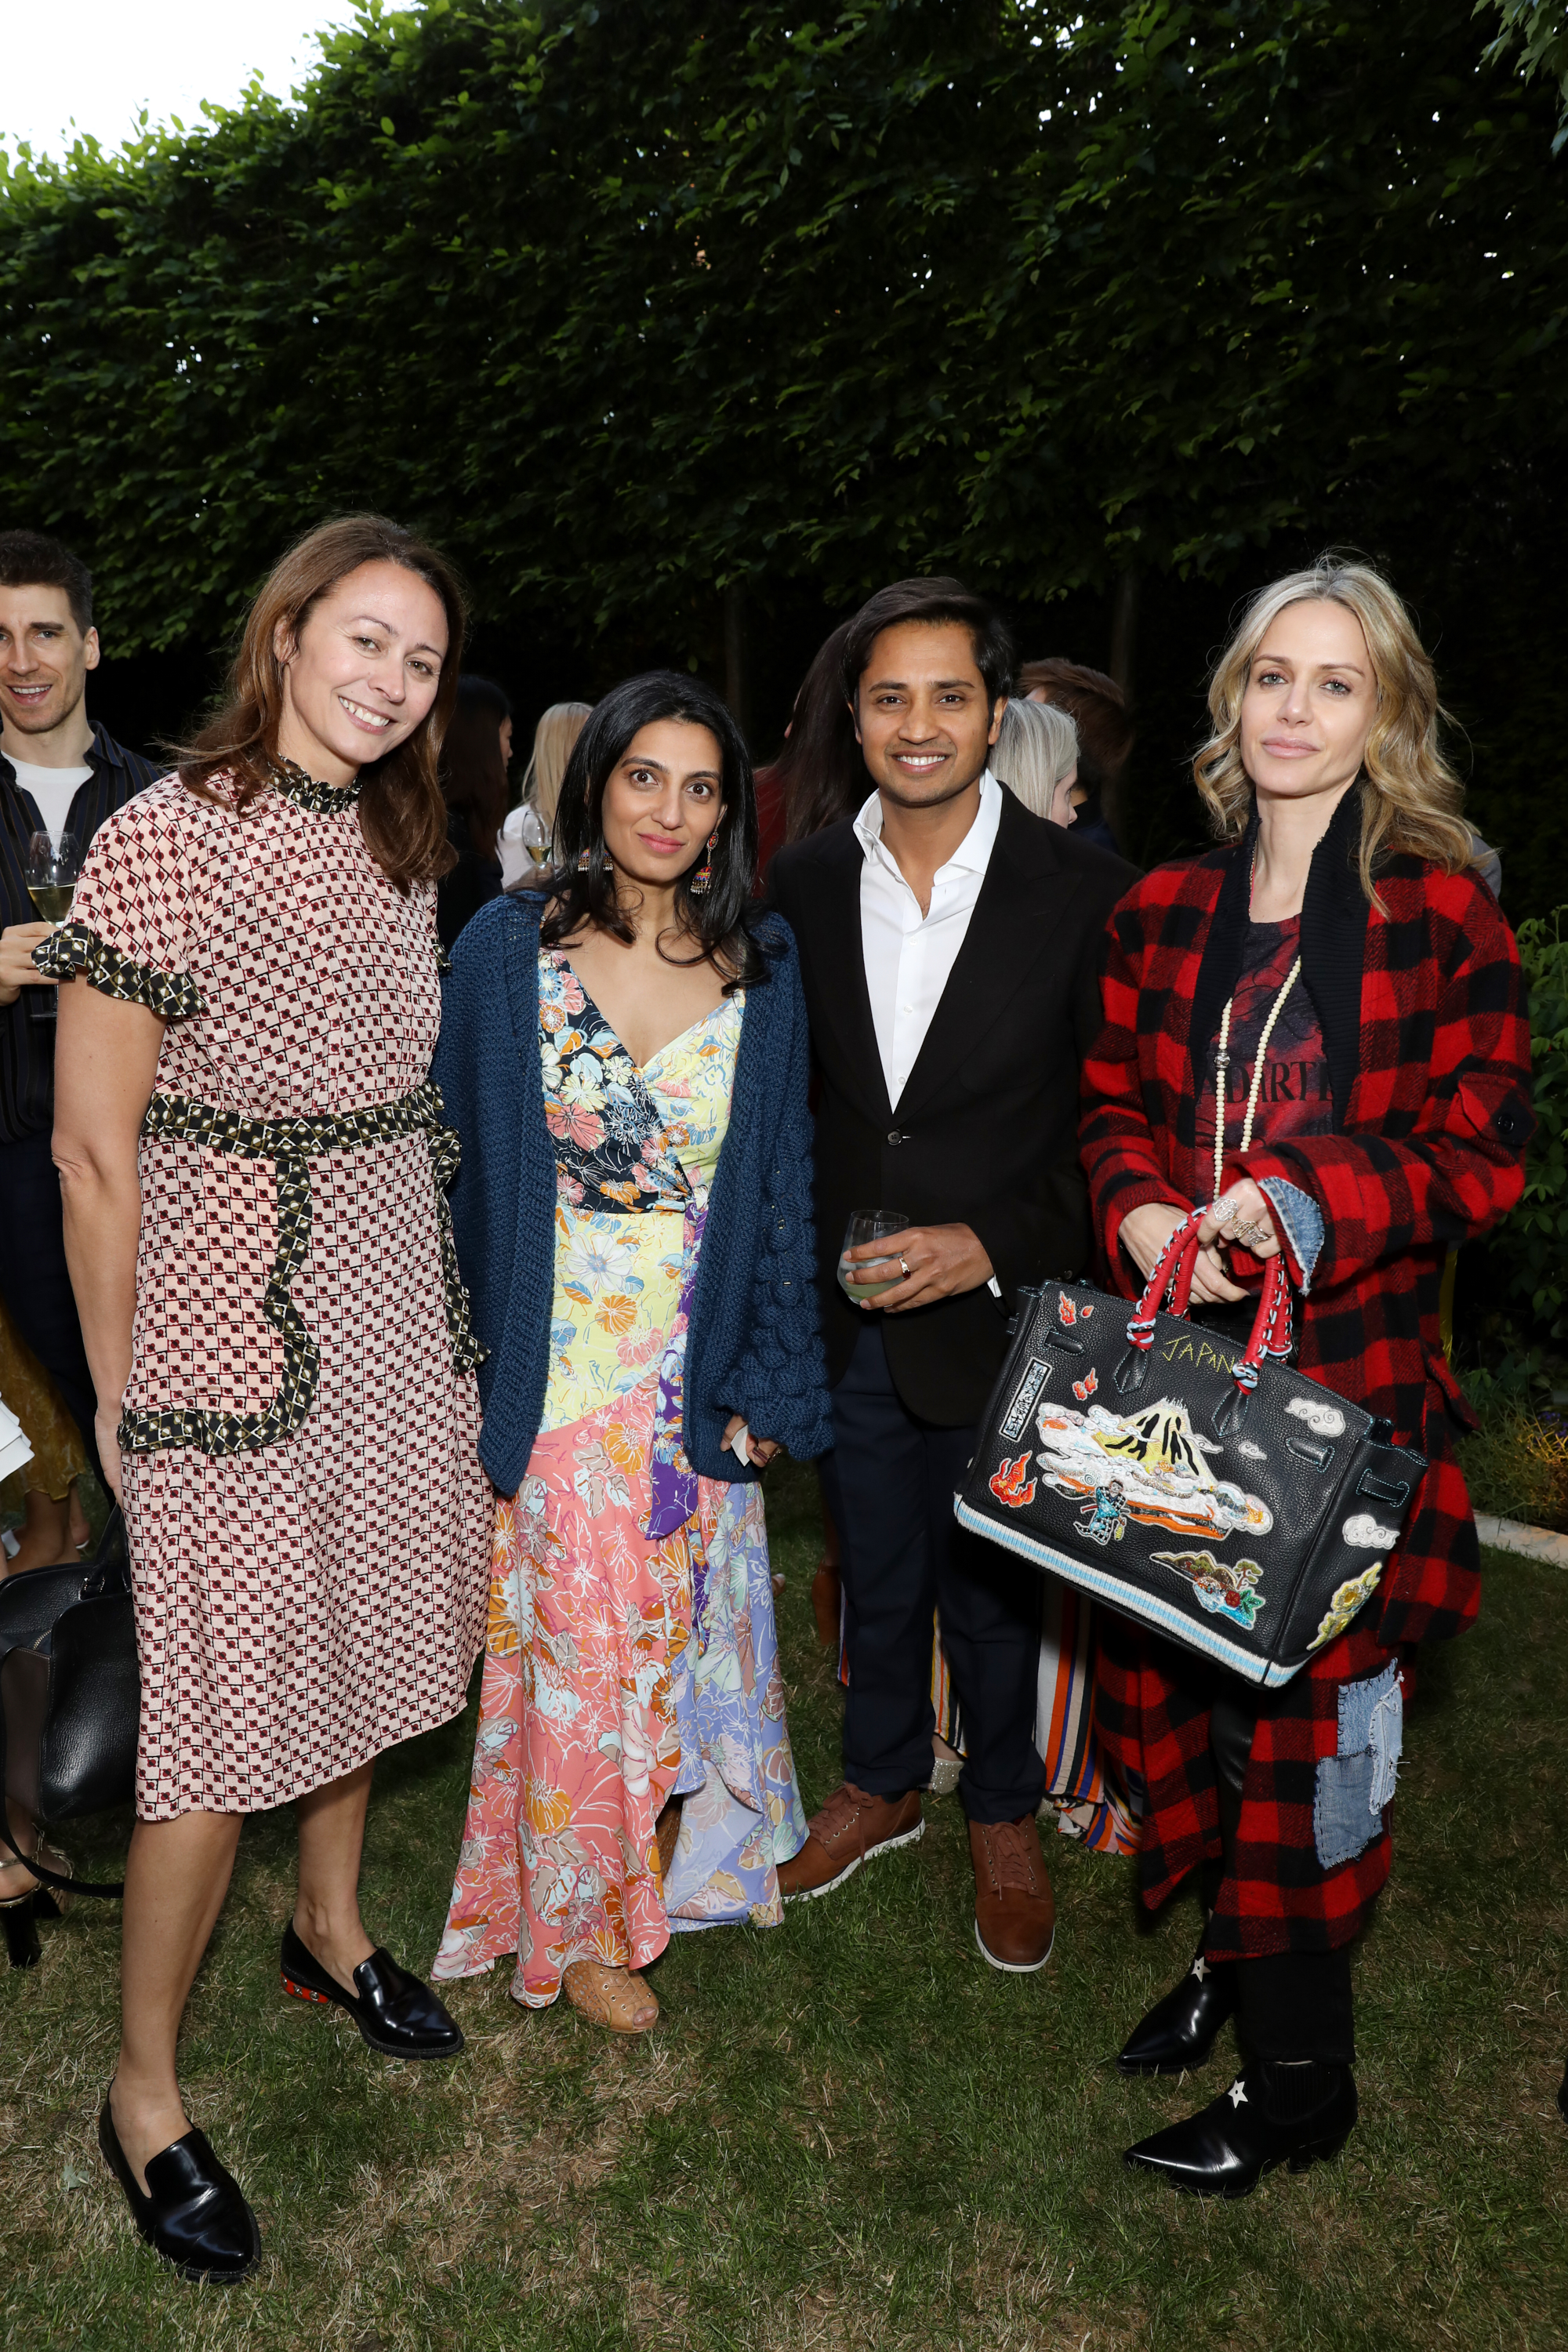 Megha Mittal and Aditya Mittal attend the British Fashion